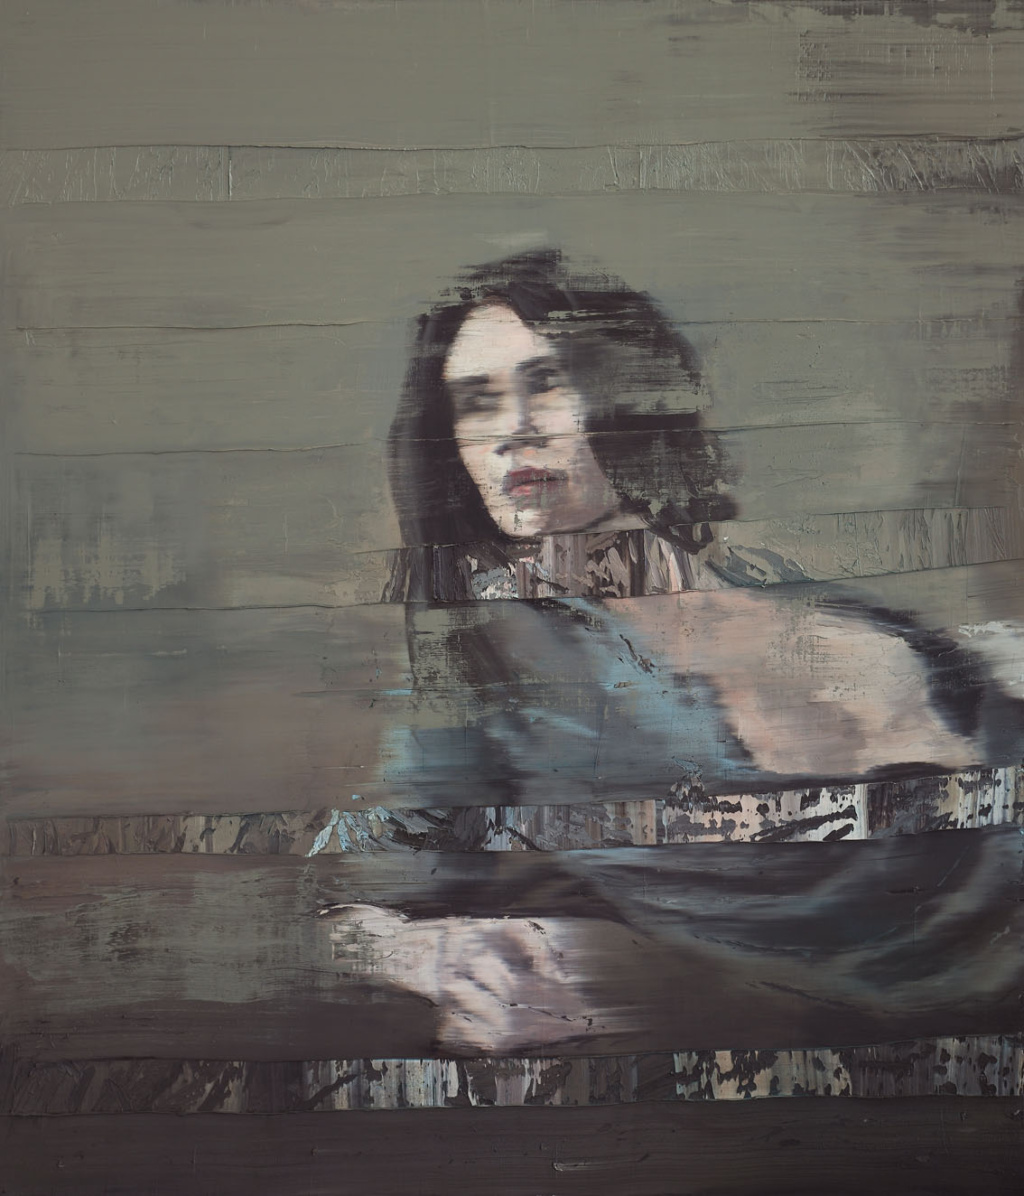 Andy Denzler, East I, #2217, 2014
Oil on canvas
140 x 120 cm